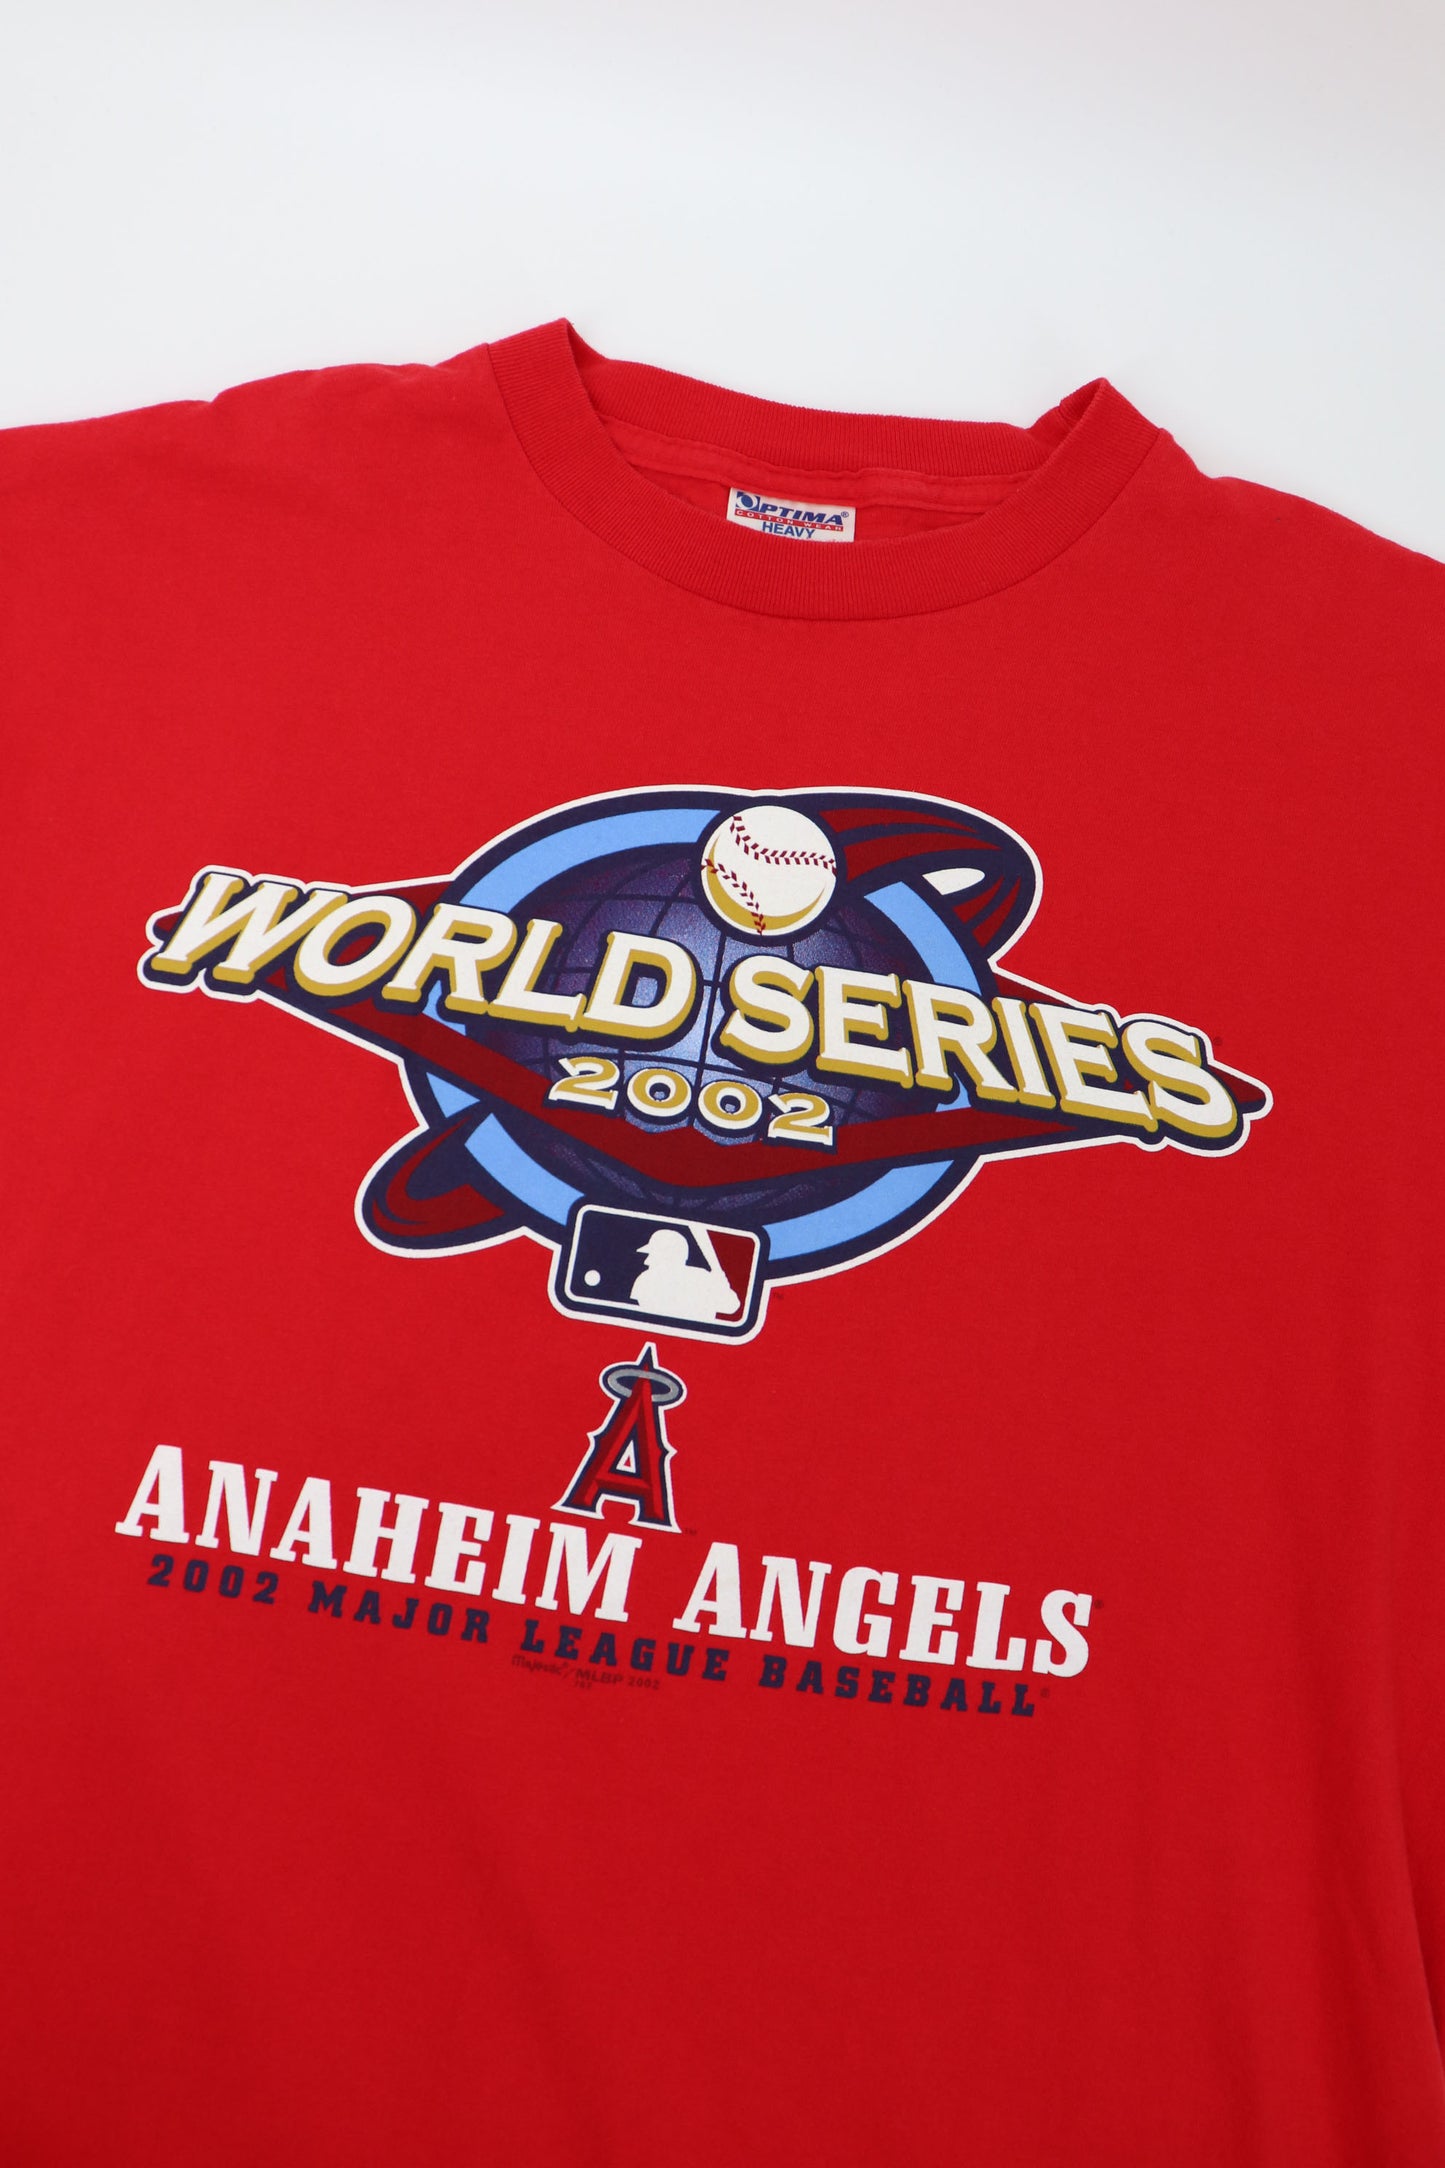 ANAHEIM ANGELS MLB WORLD SERIES 2002 TEE (L)